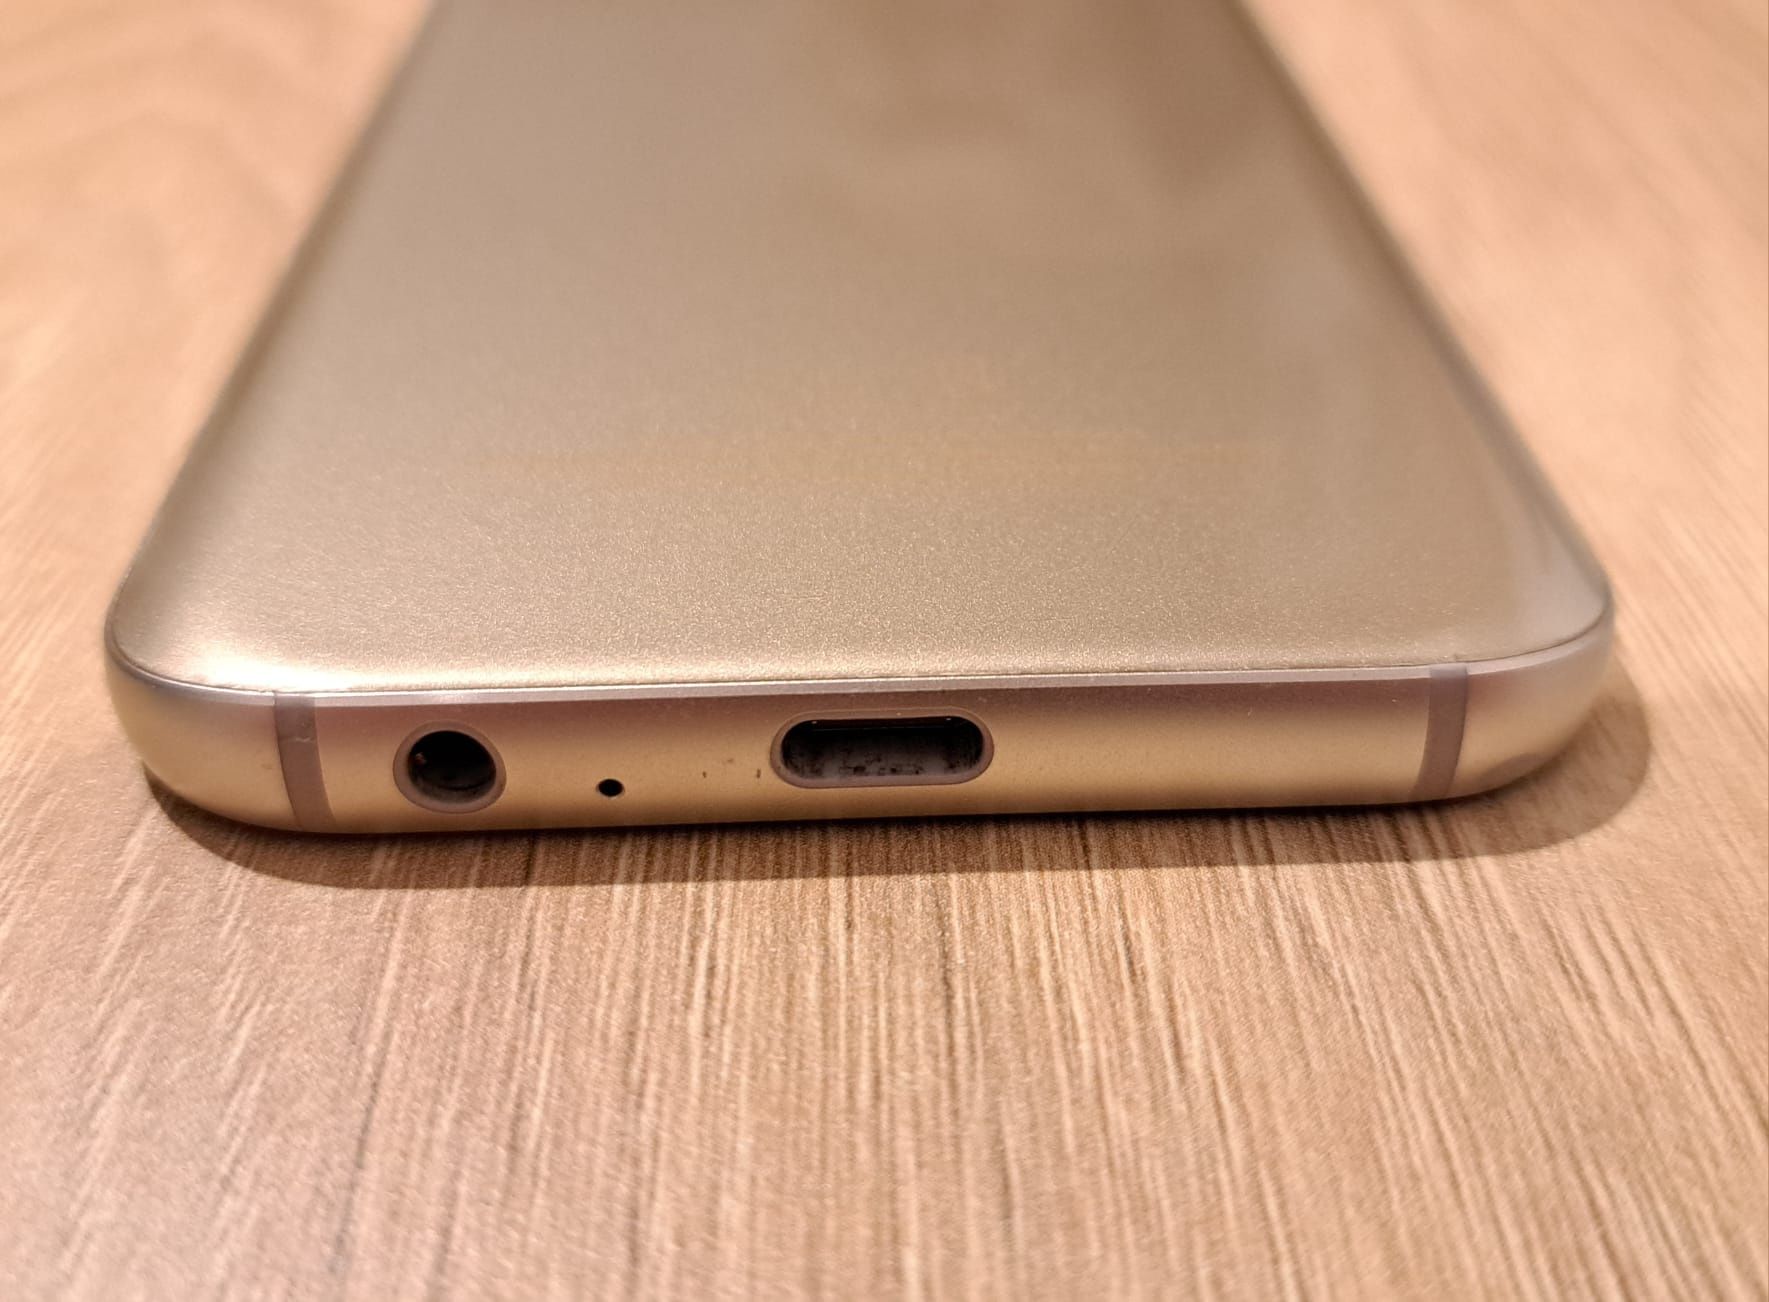 Samsung A5 2017 Gold (pachet cu accesorii)